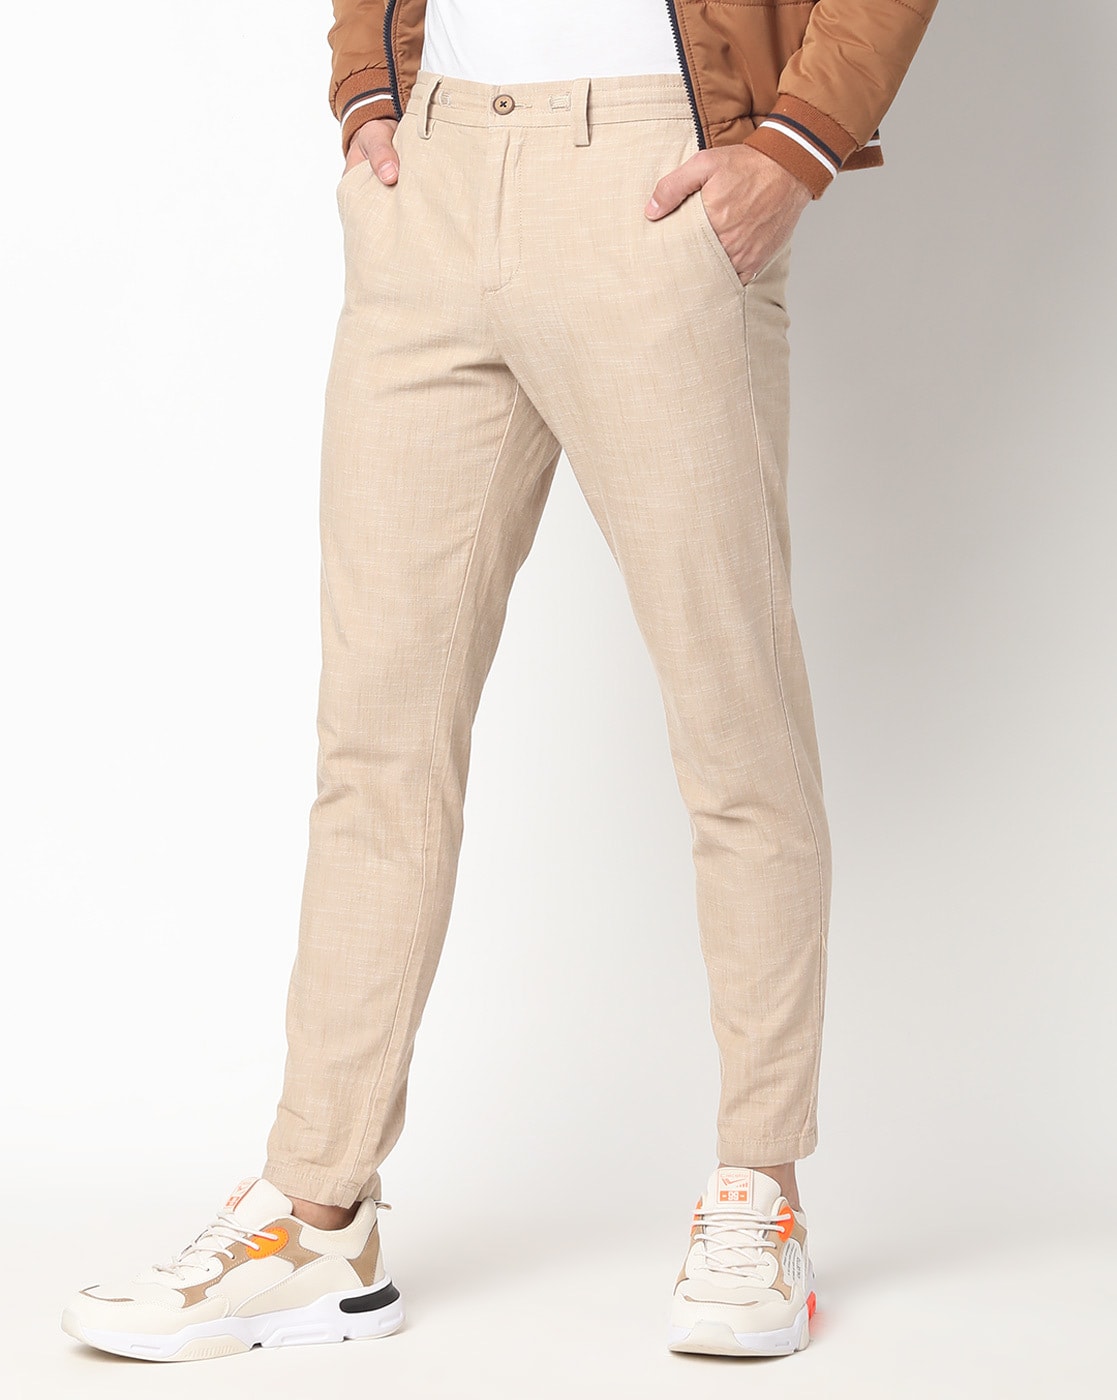 Buy Men Beige Slim Fit Solid Casual Trousers Online  780125  Allen Solly